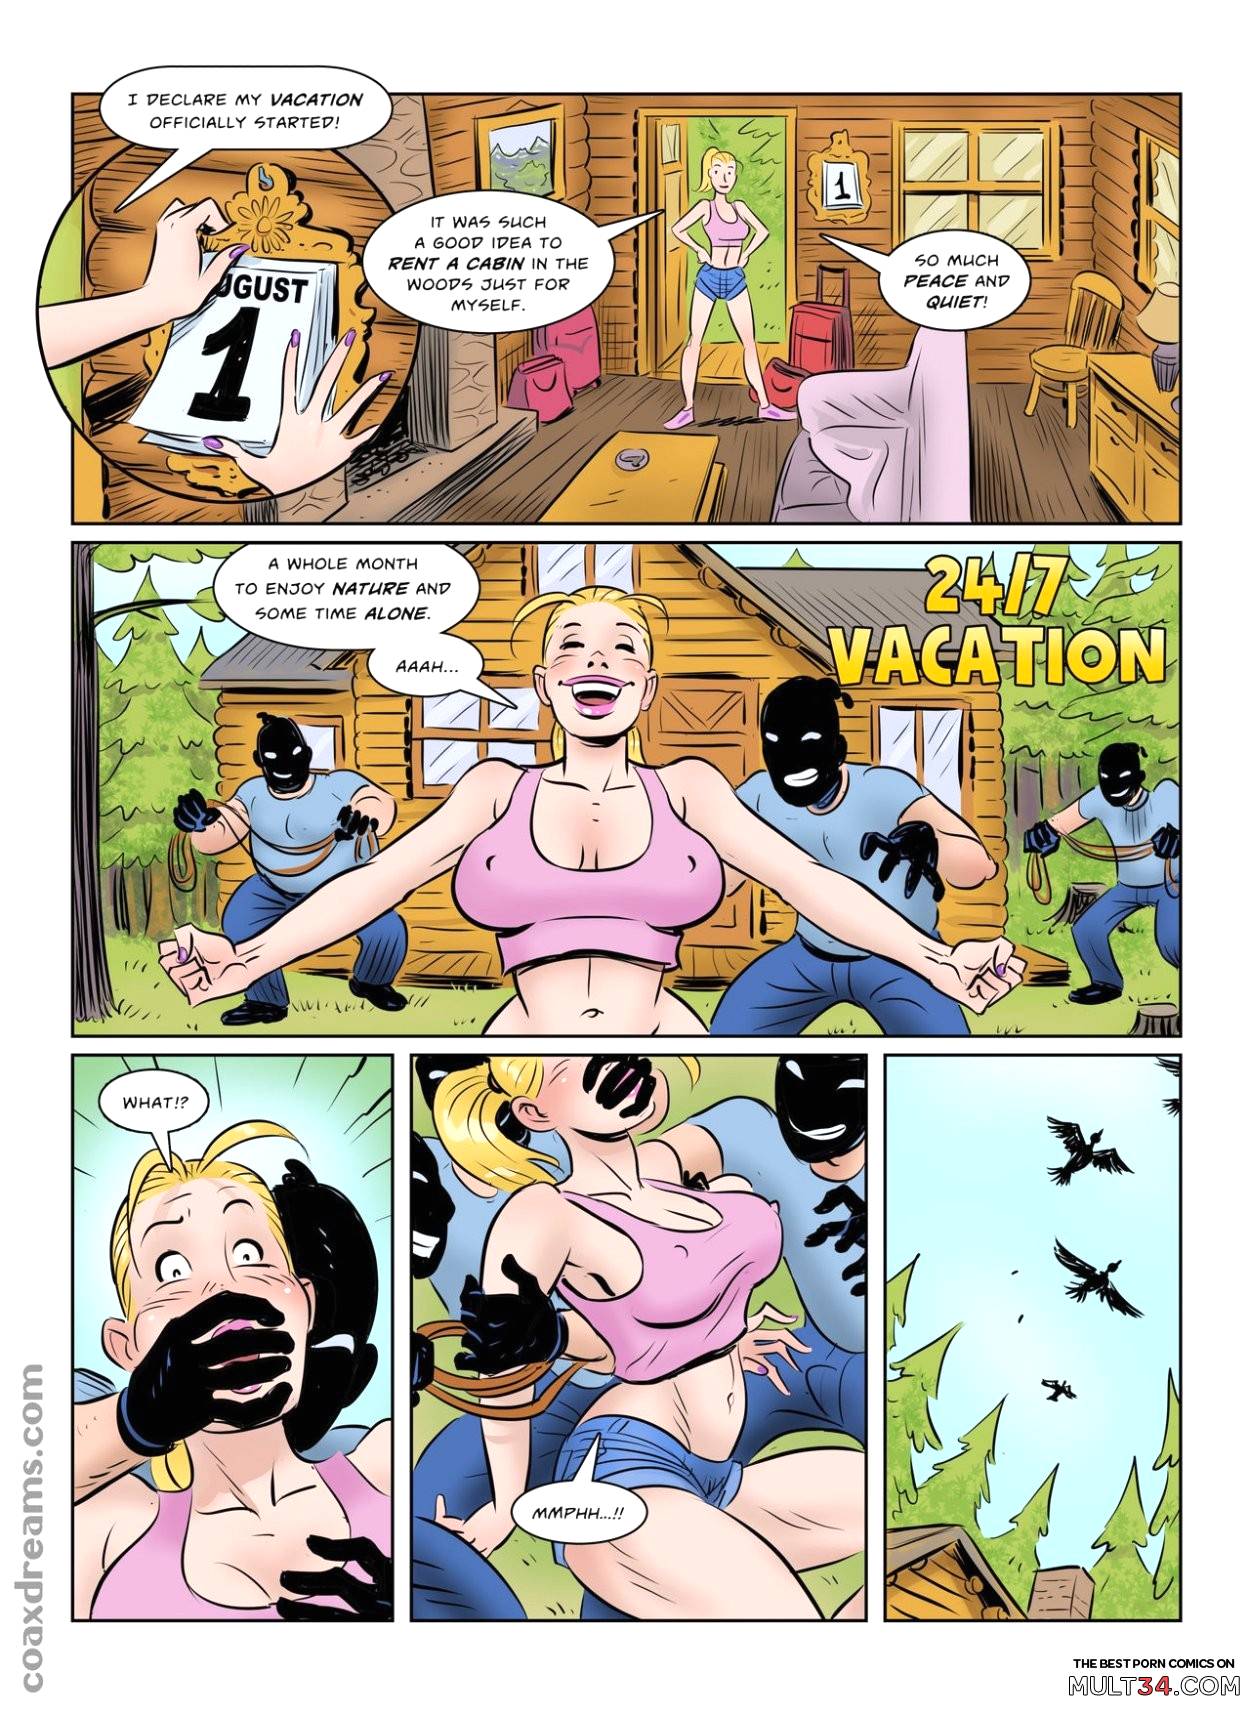 24/7 vacation porn comic - the best cartoon porn comics, Rule 34 | MULT34